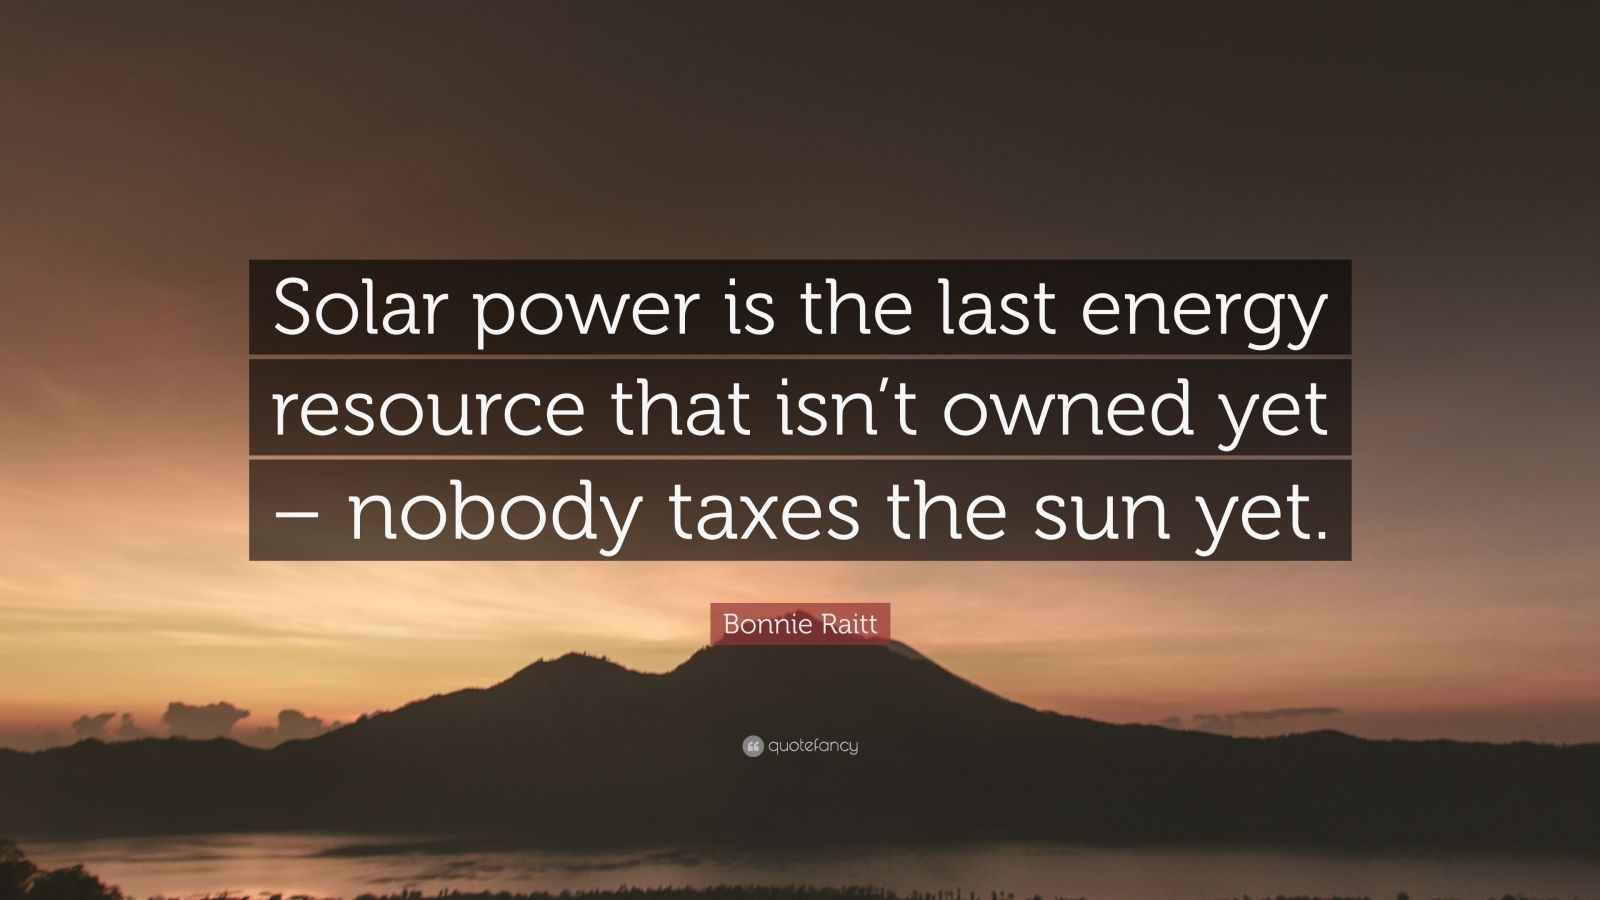 Bonnie Raitt Quote: “Solar power is the last energy resource that isn’t